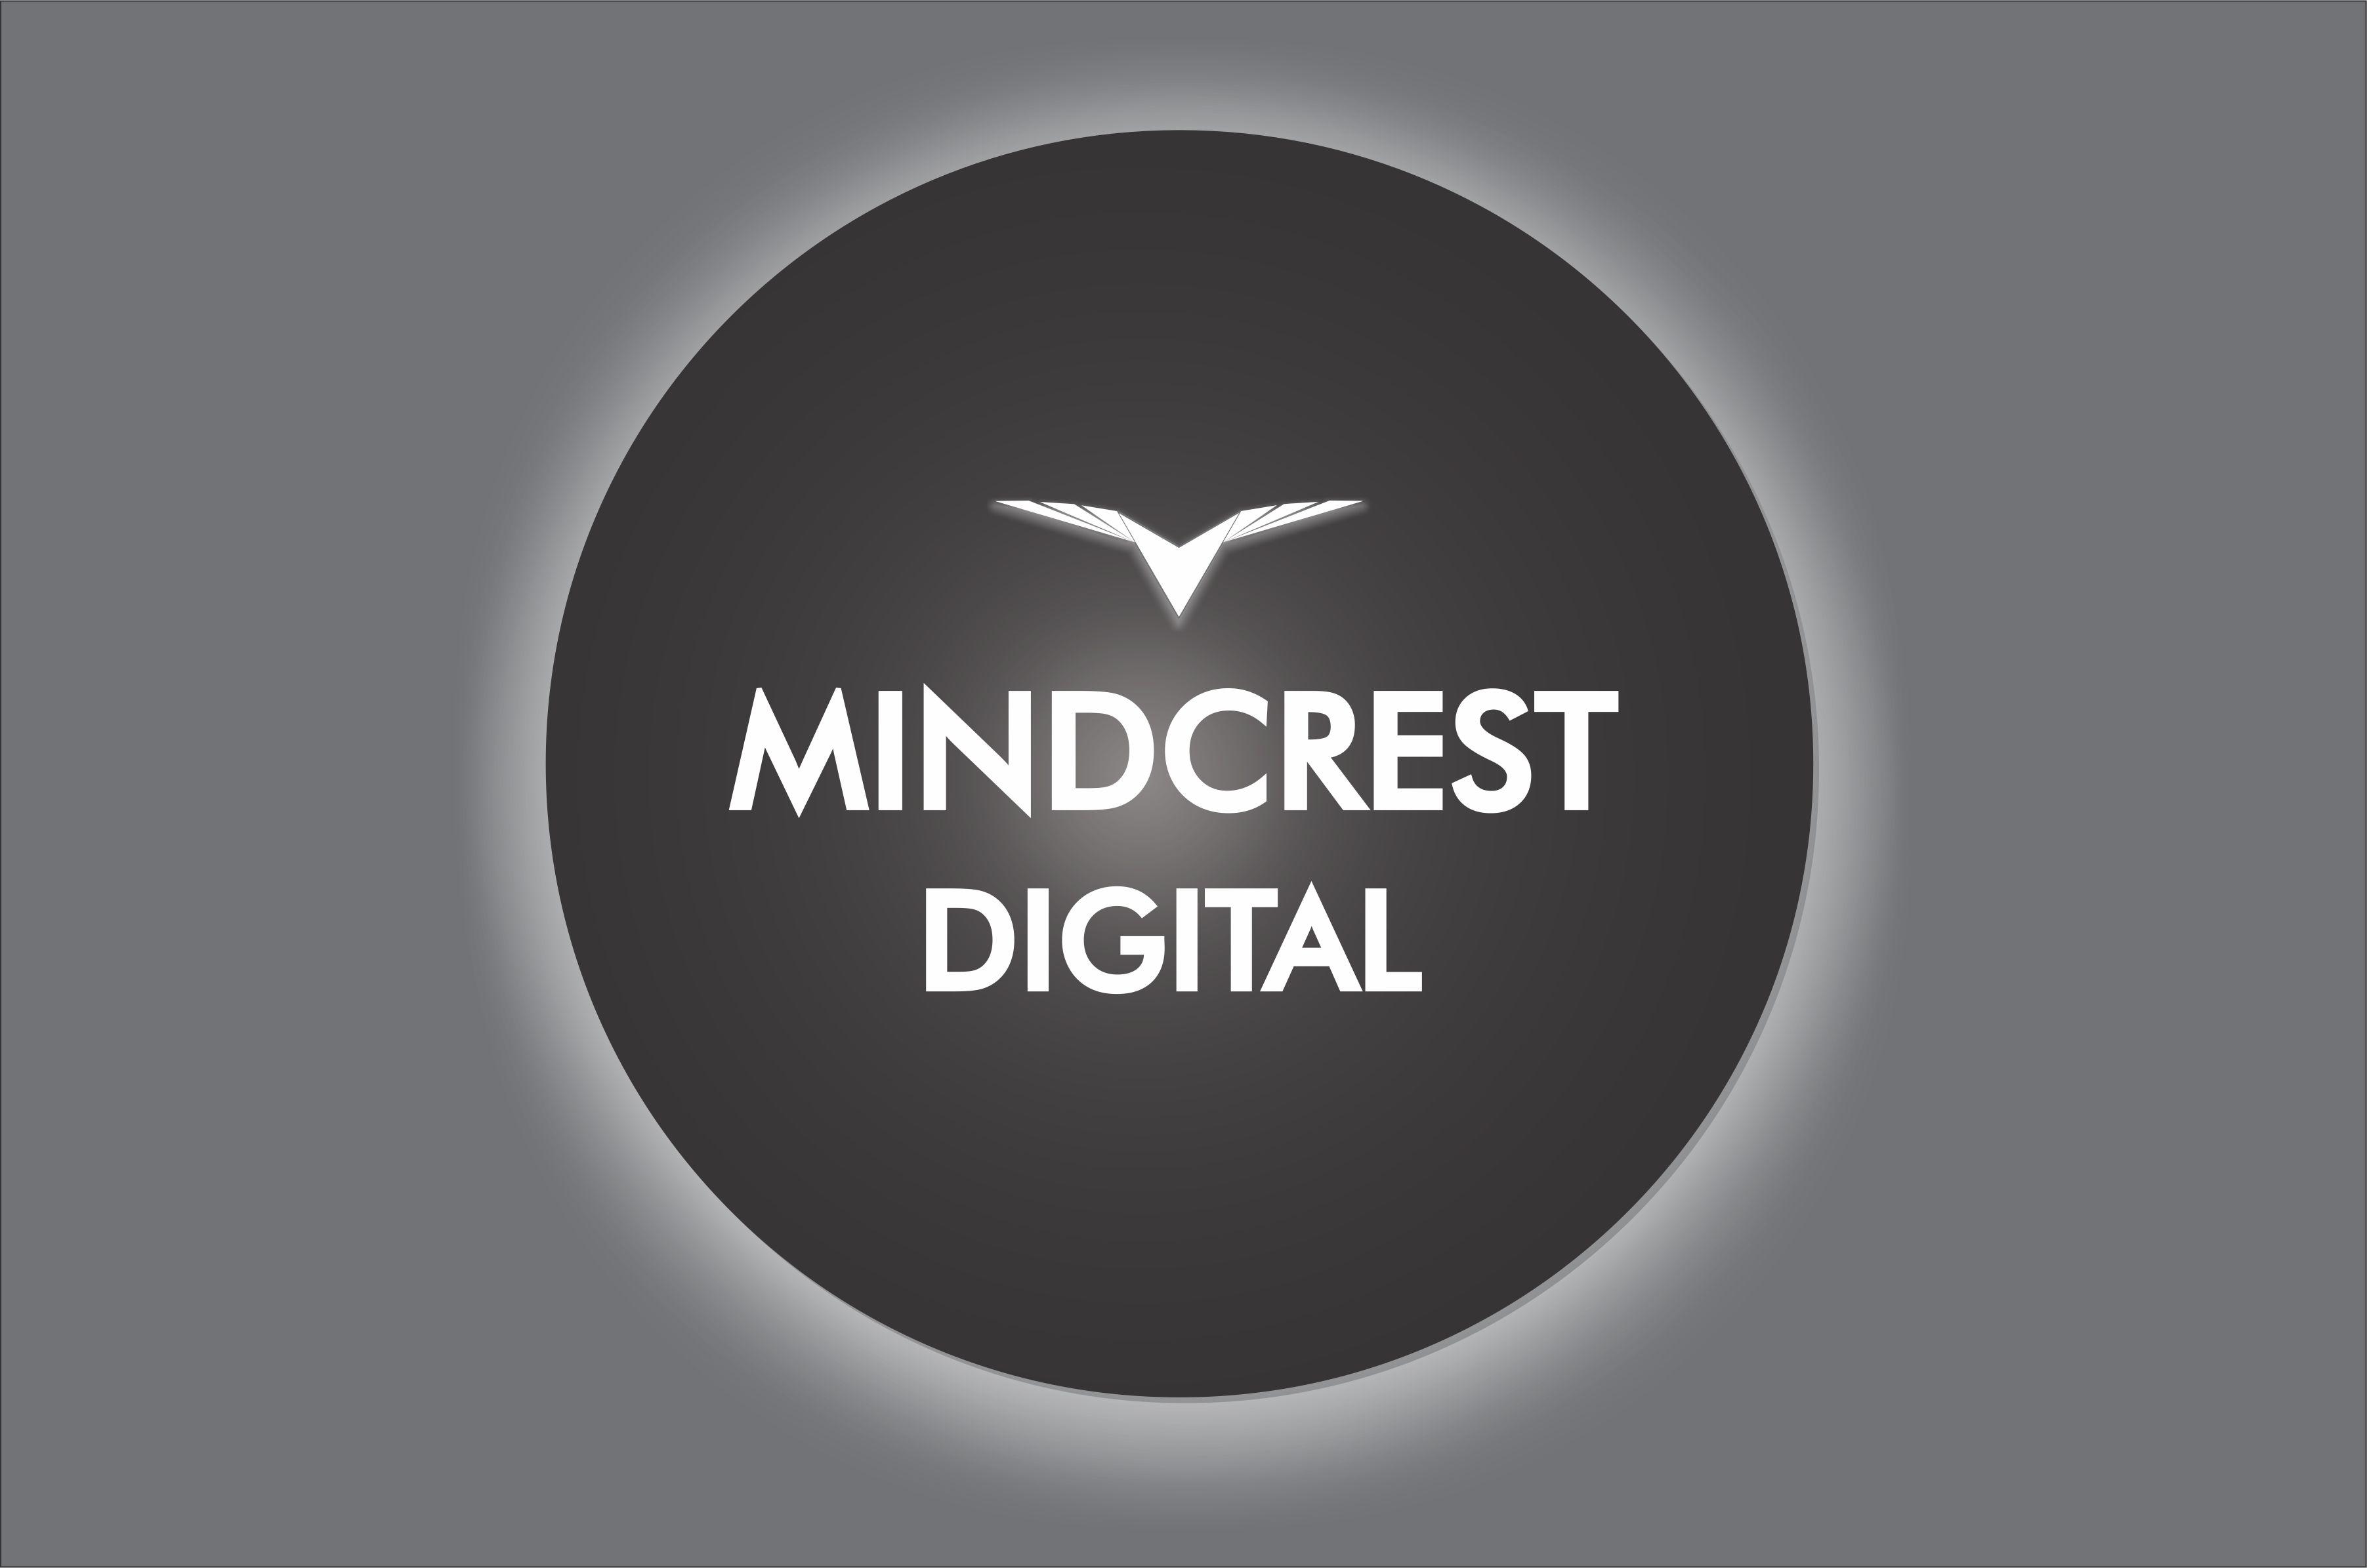 Mindcrest Digital - Digital Marketing Company in India profile on Qualified.One